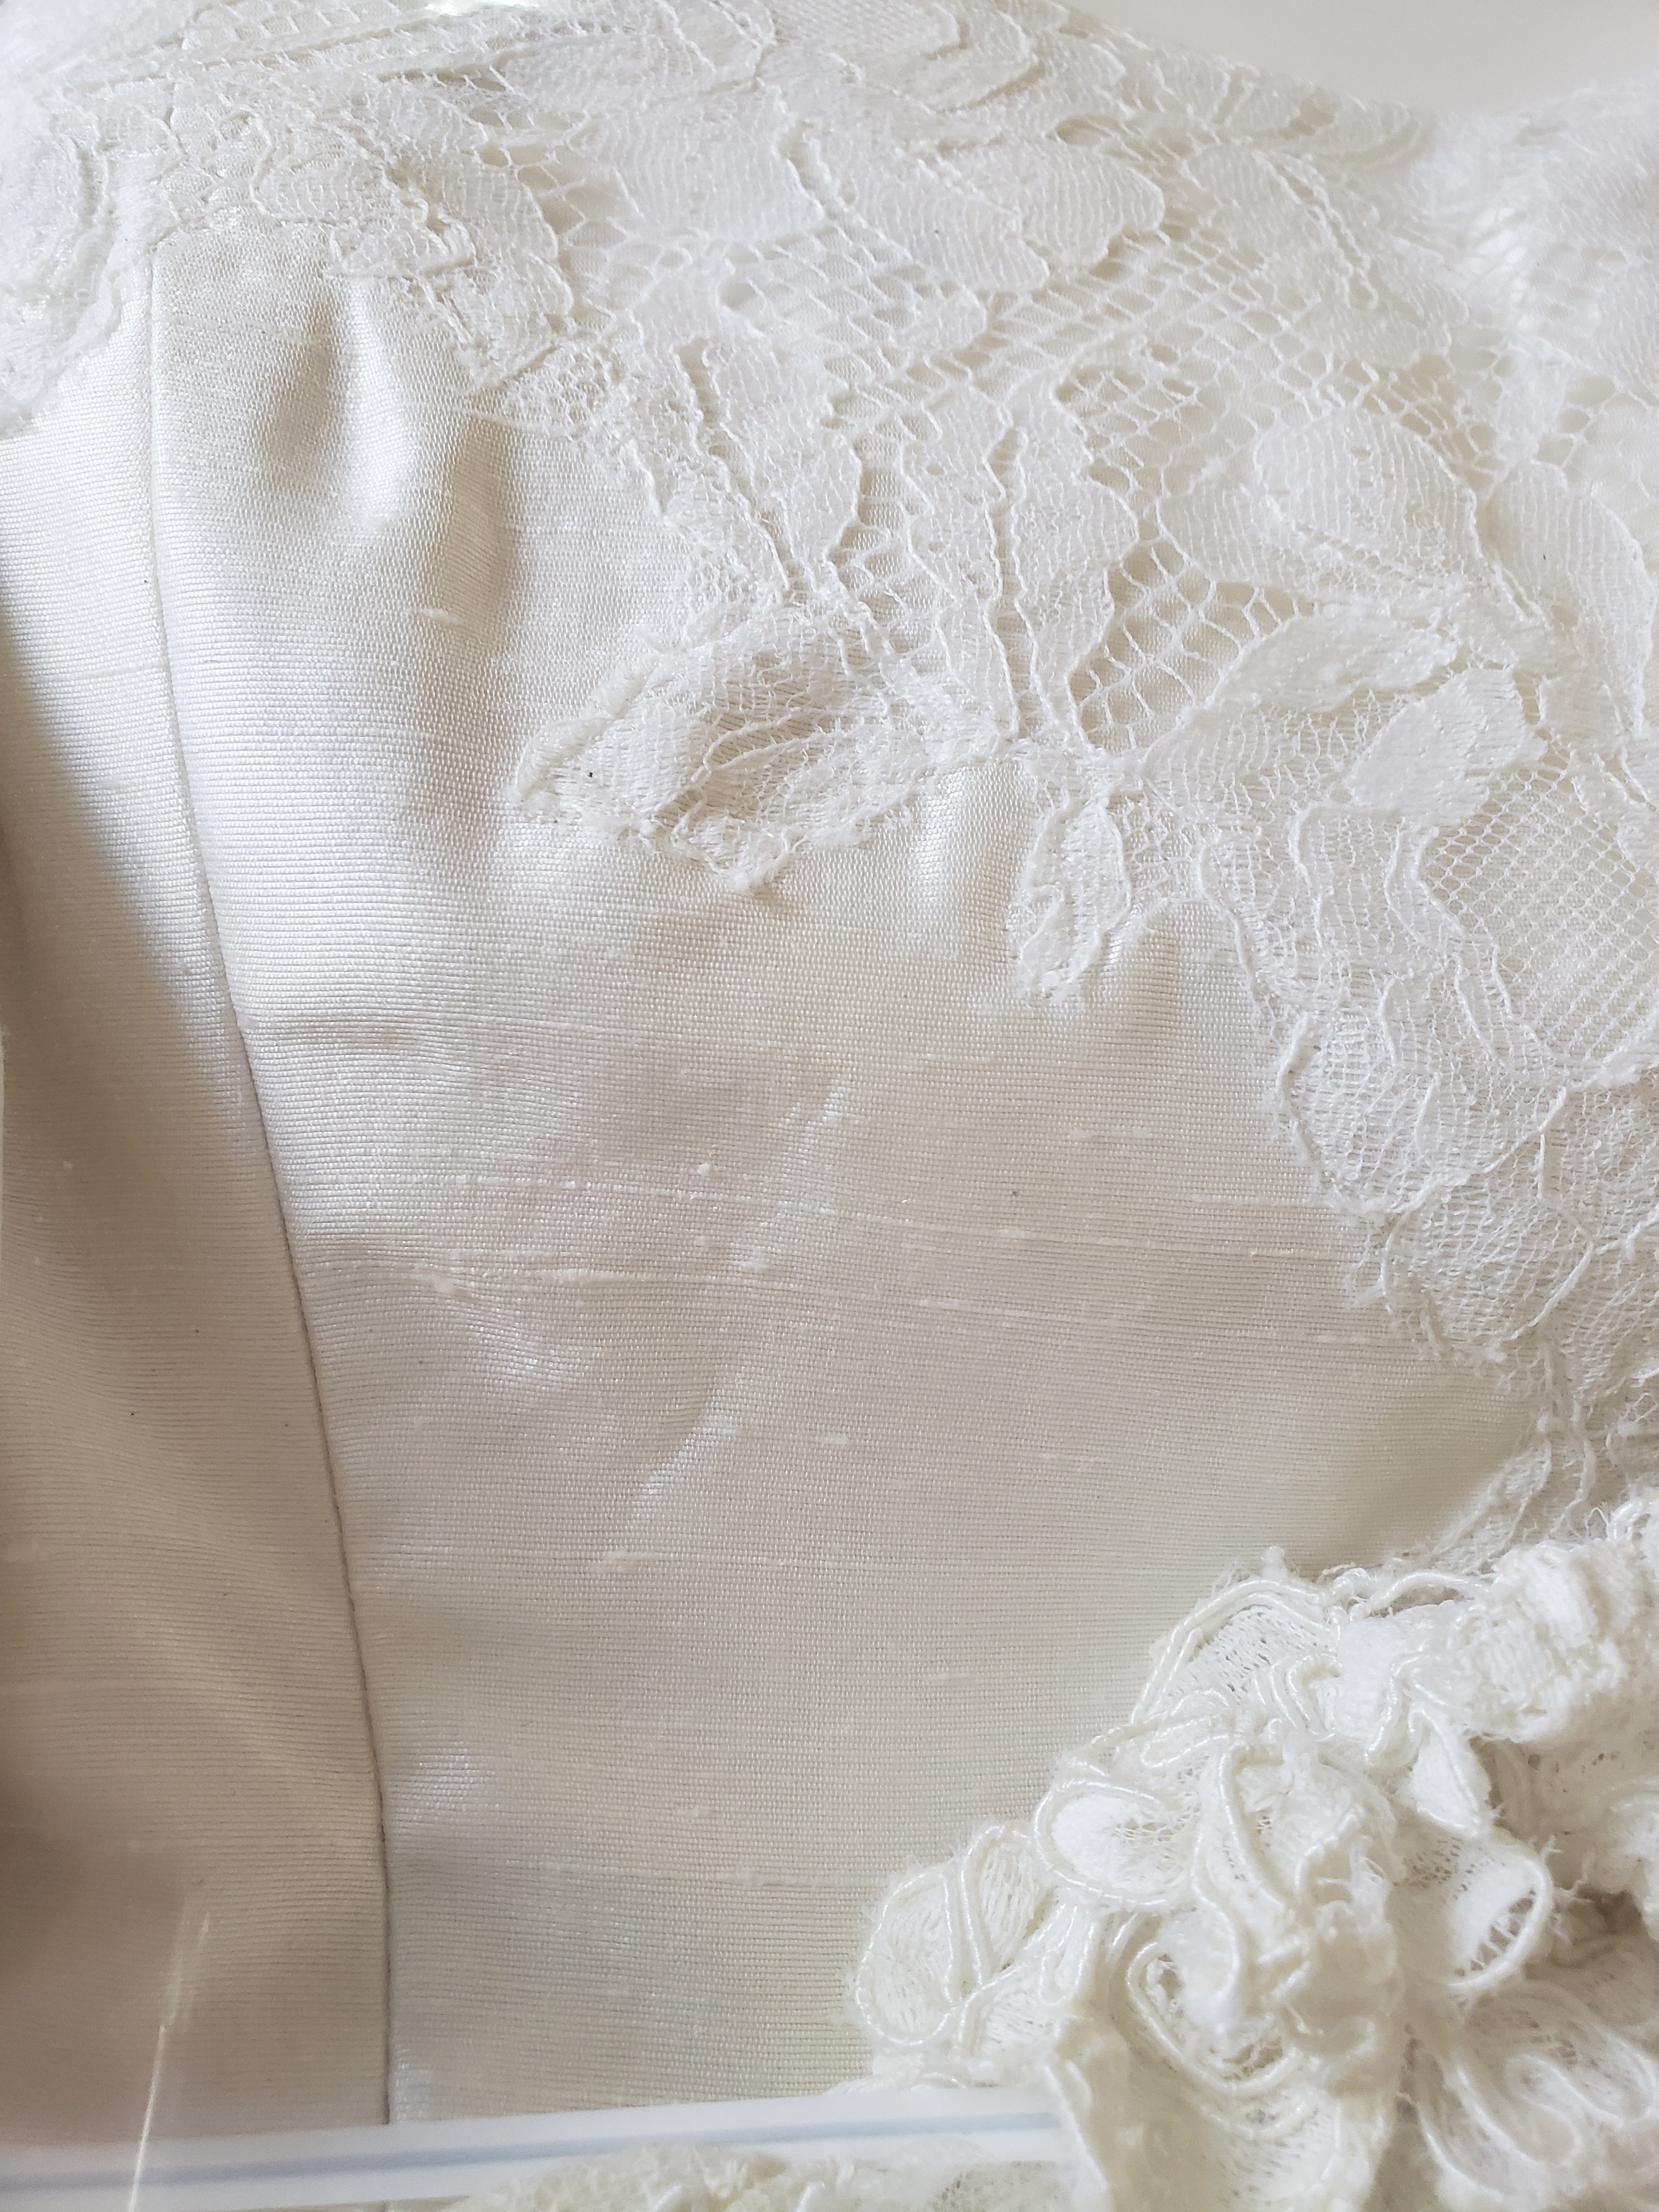 Amsale 'Silk Taffeta' size 10 used wedding dress – Nearly Newlywed